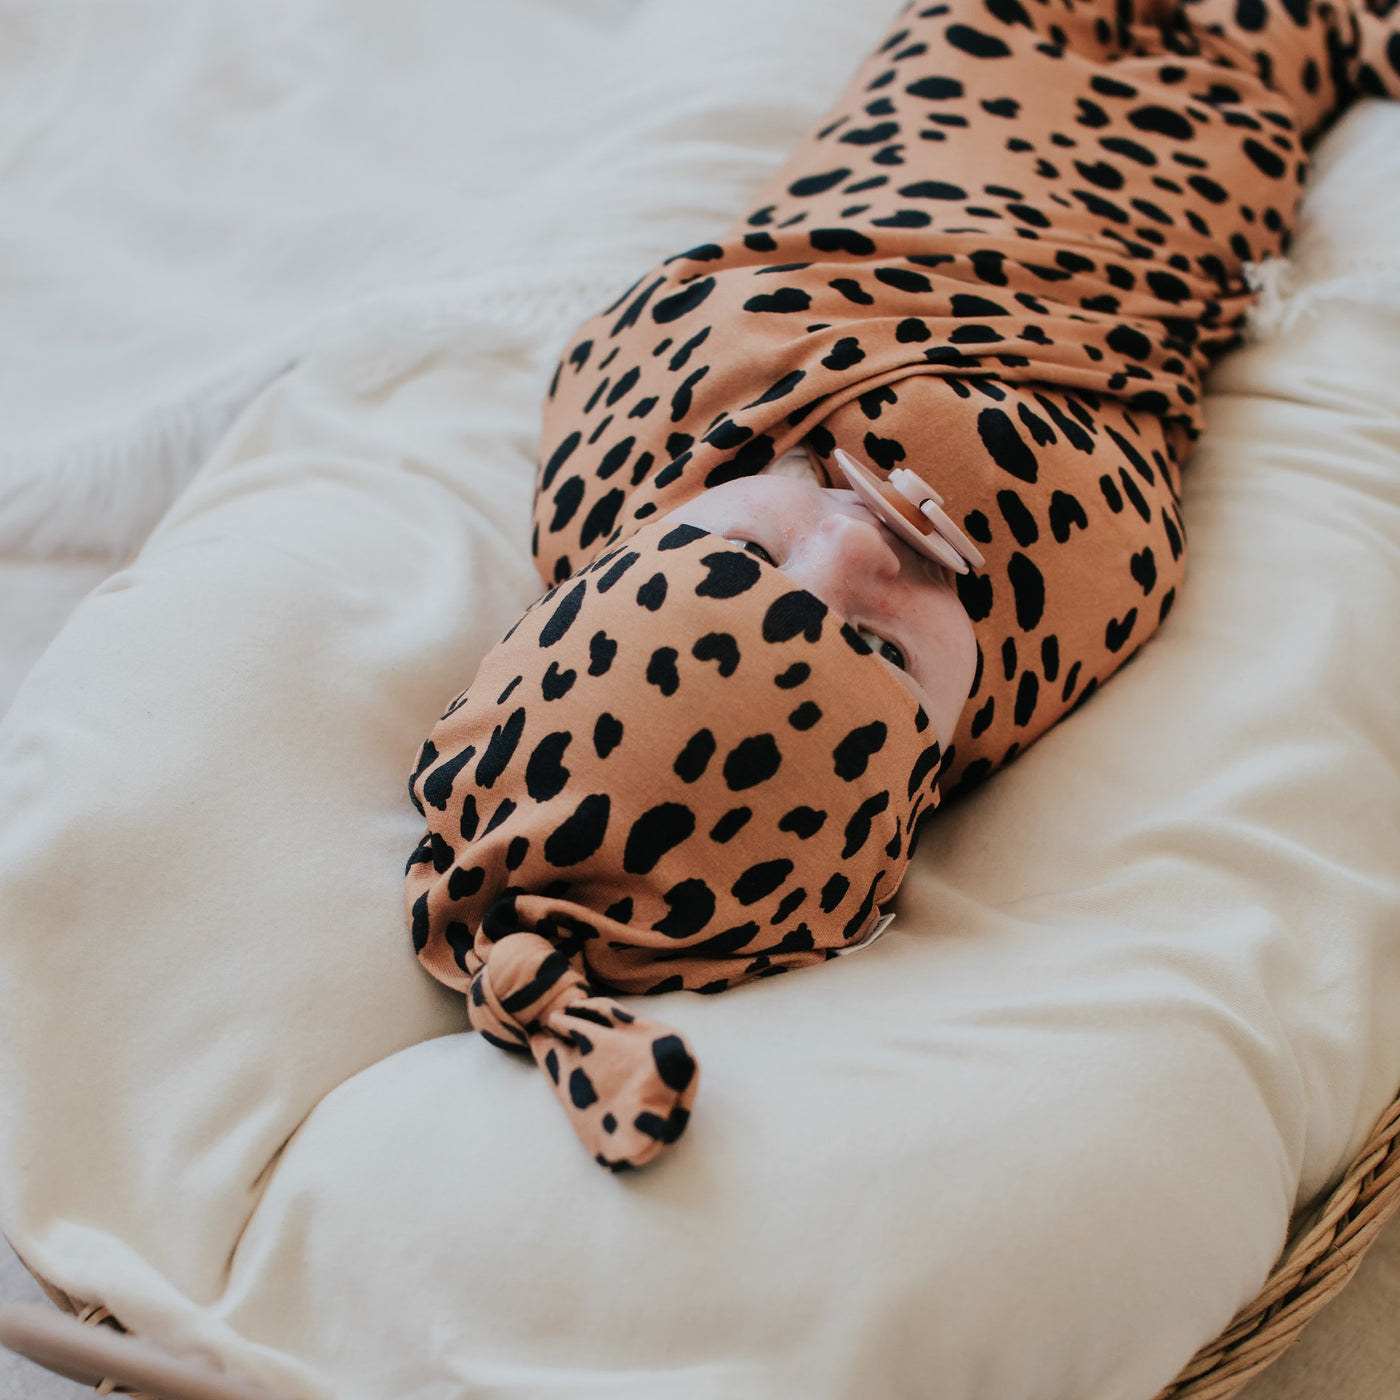 Newborn baby wearing top knot beanie in cheetah print